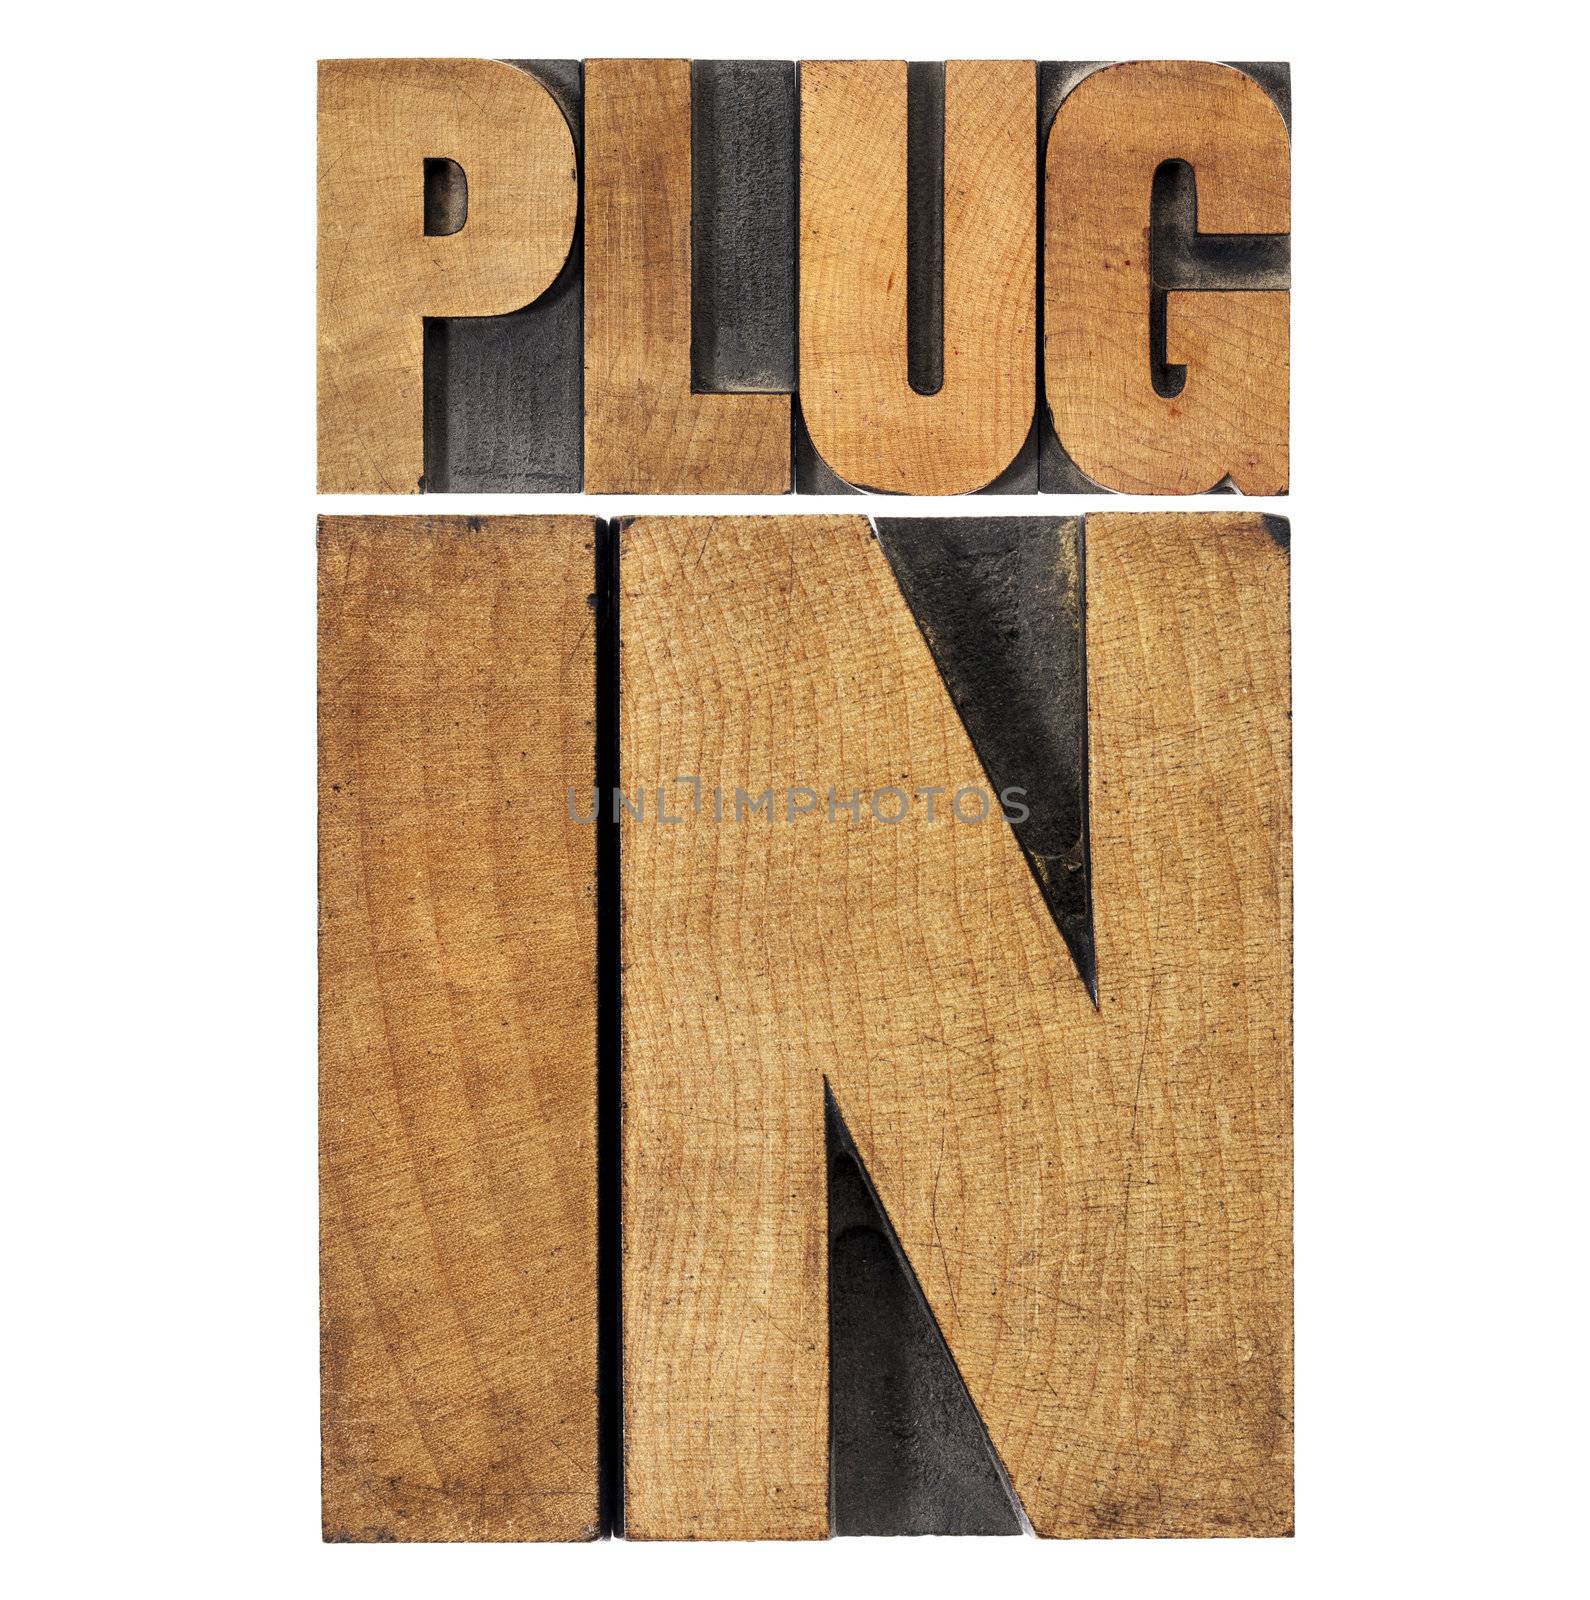 plugin (plug-in) in wood type by PixelsAway